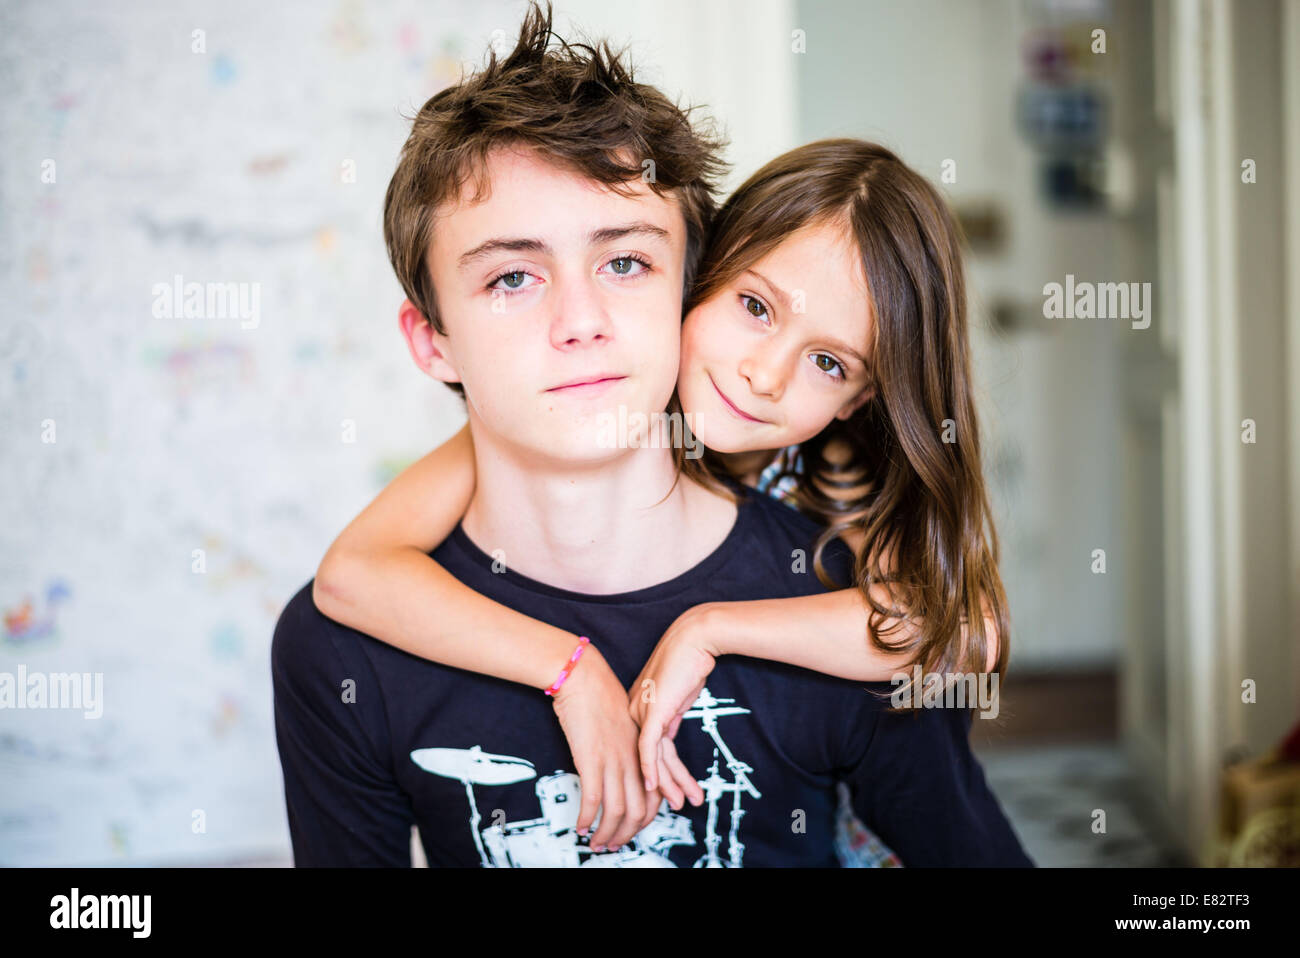 7 year old girl and teenage boy. Stock Photo